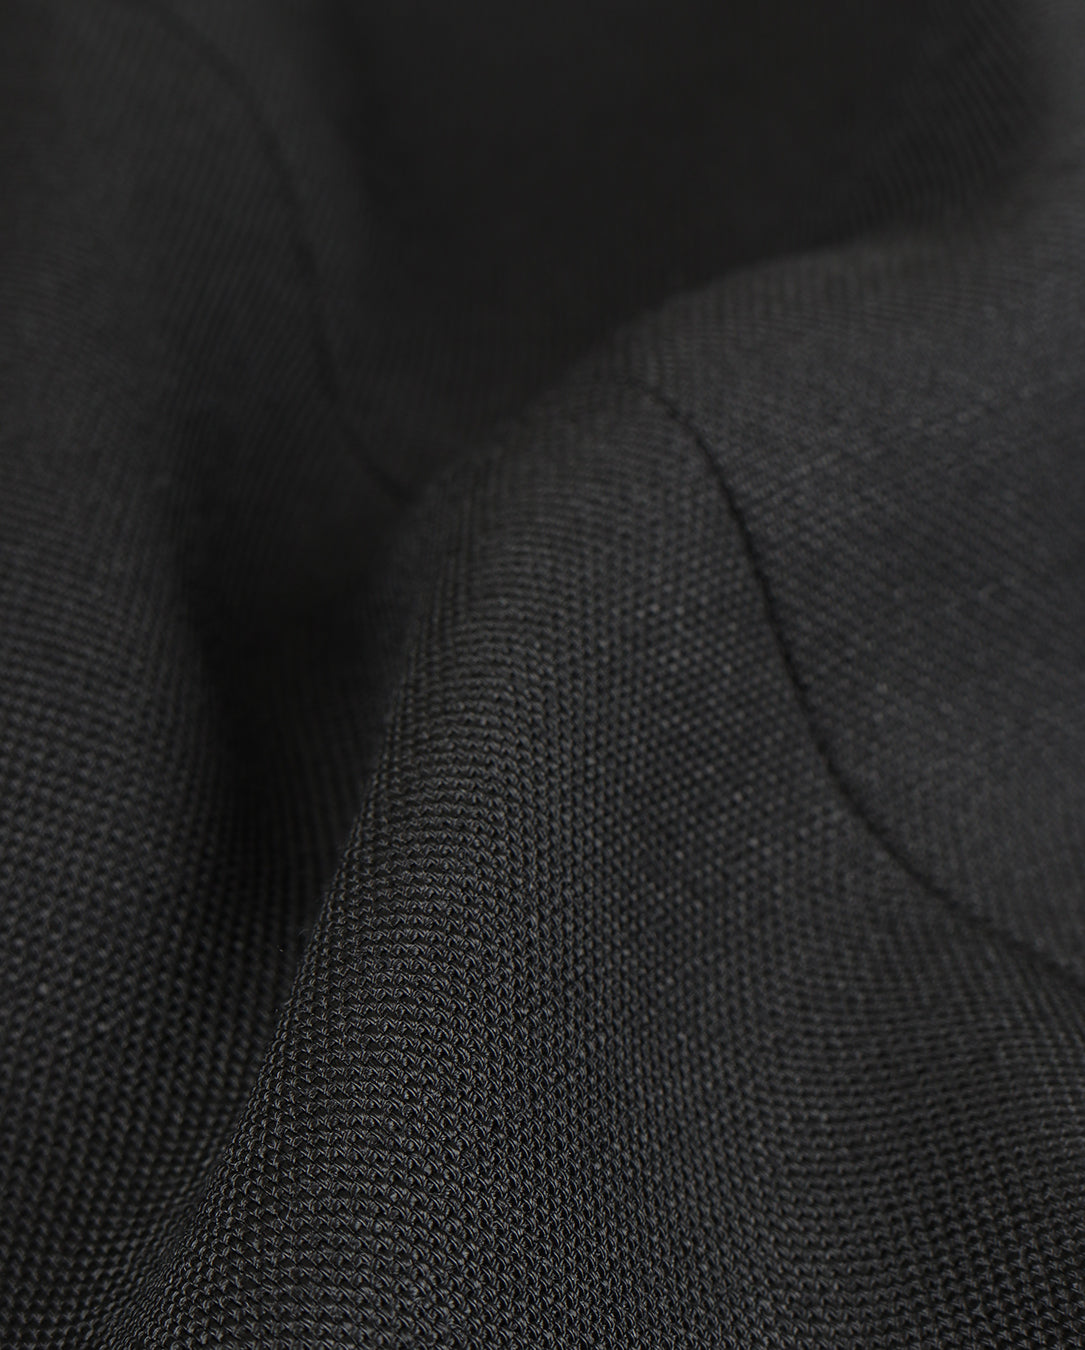 Rayon Polyester Pants black